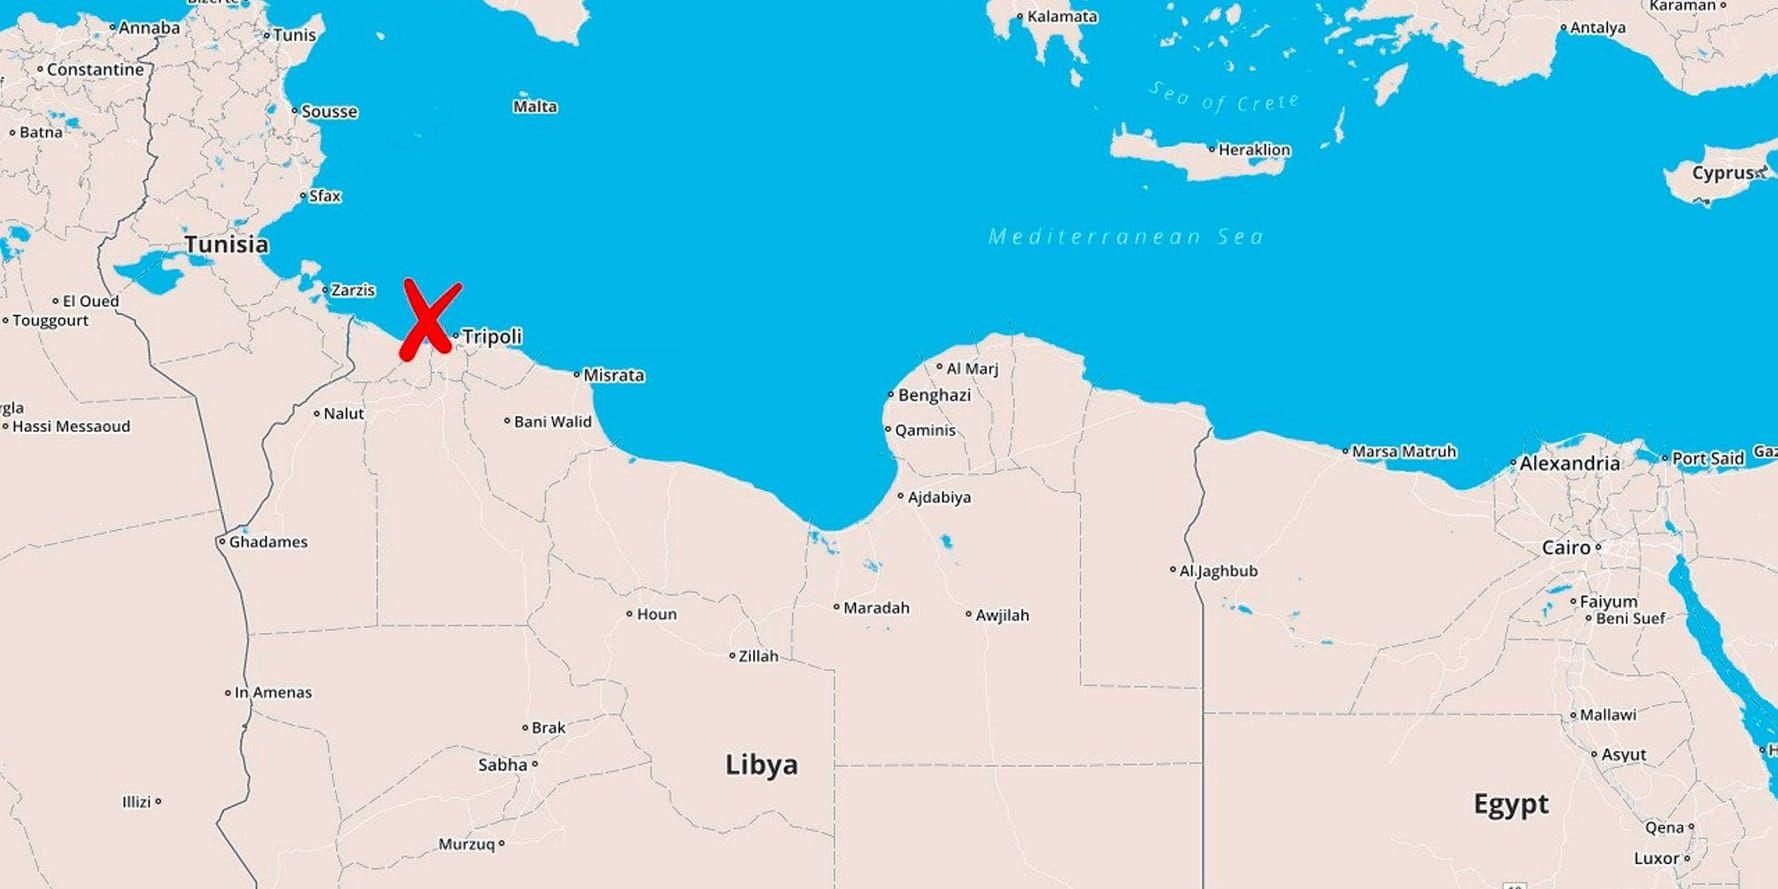 Omkring 250 migranter befaras omkomna på Medelhavet, utanför Libyens kust.